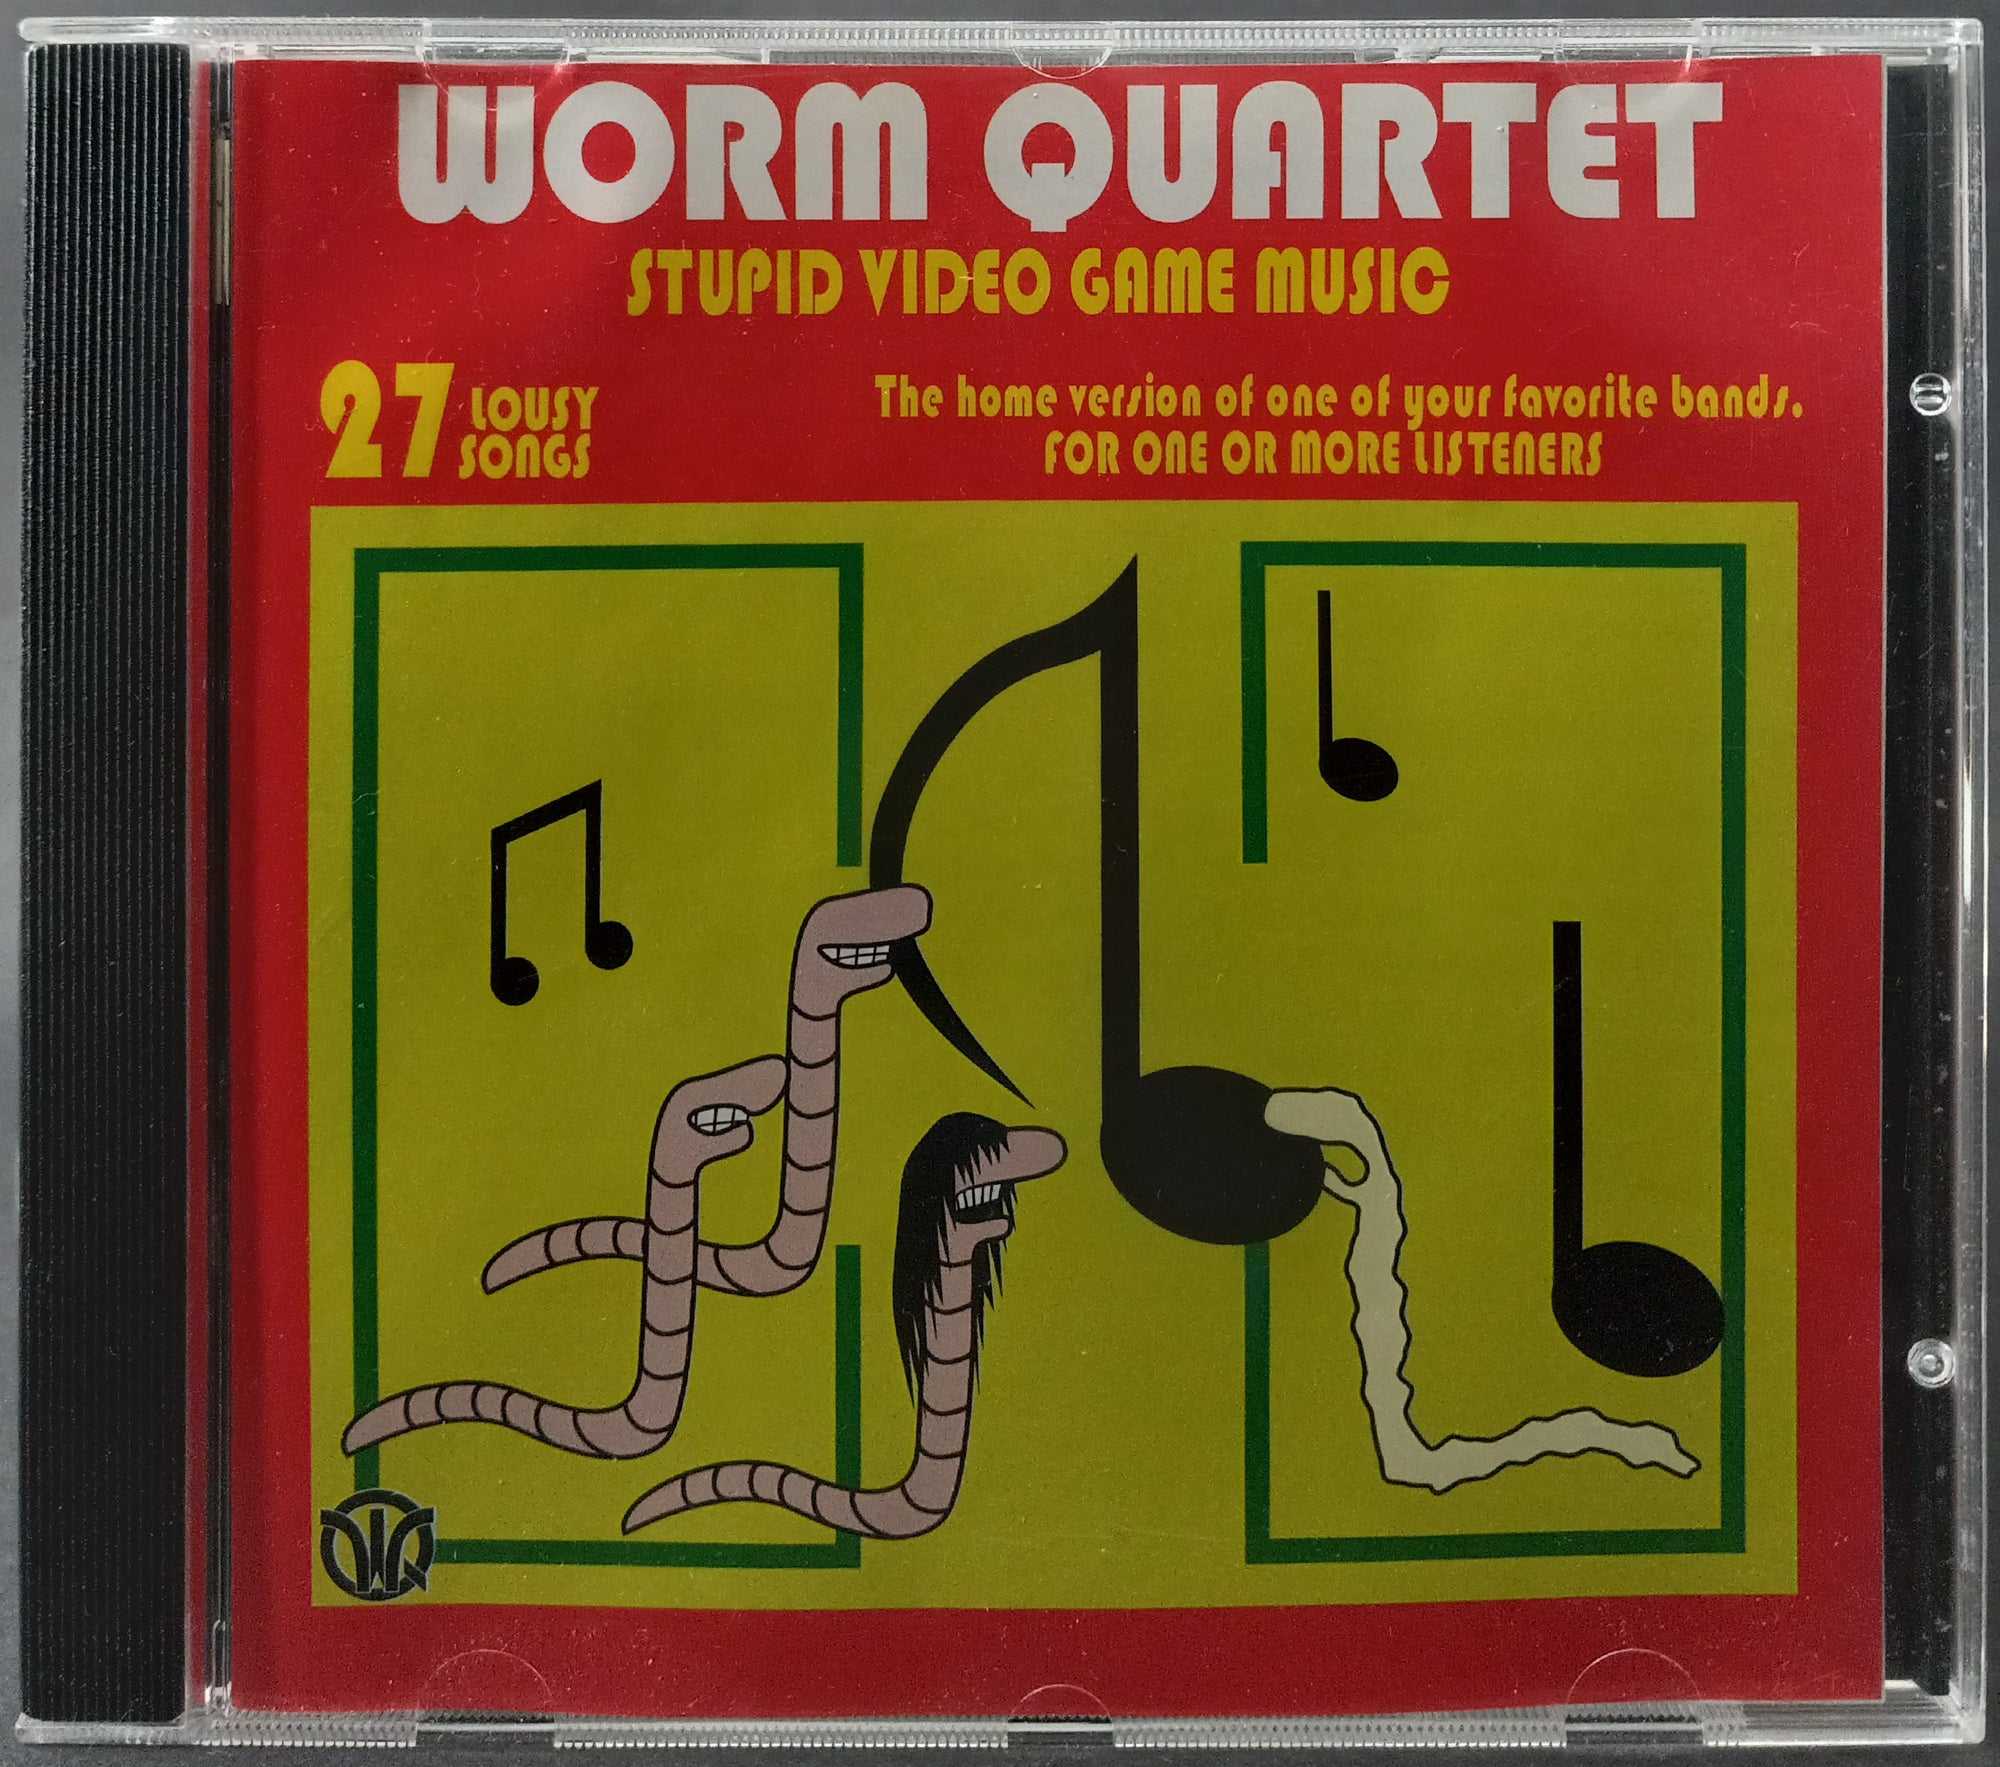 Worm-Quartet-Stupid-Video-Game-Music-CD